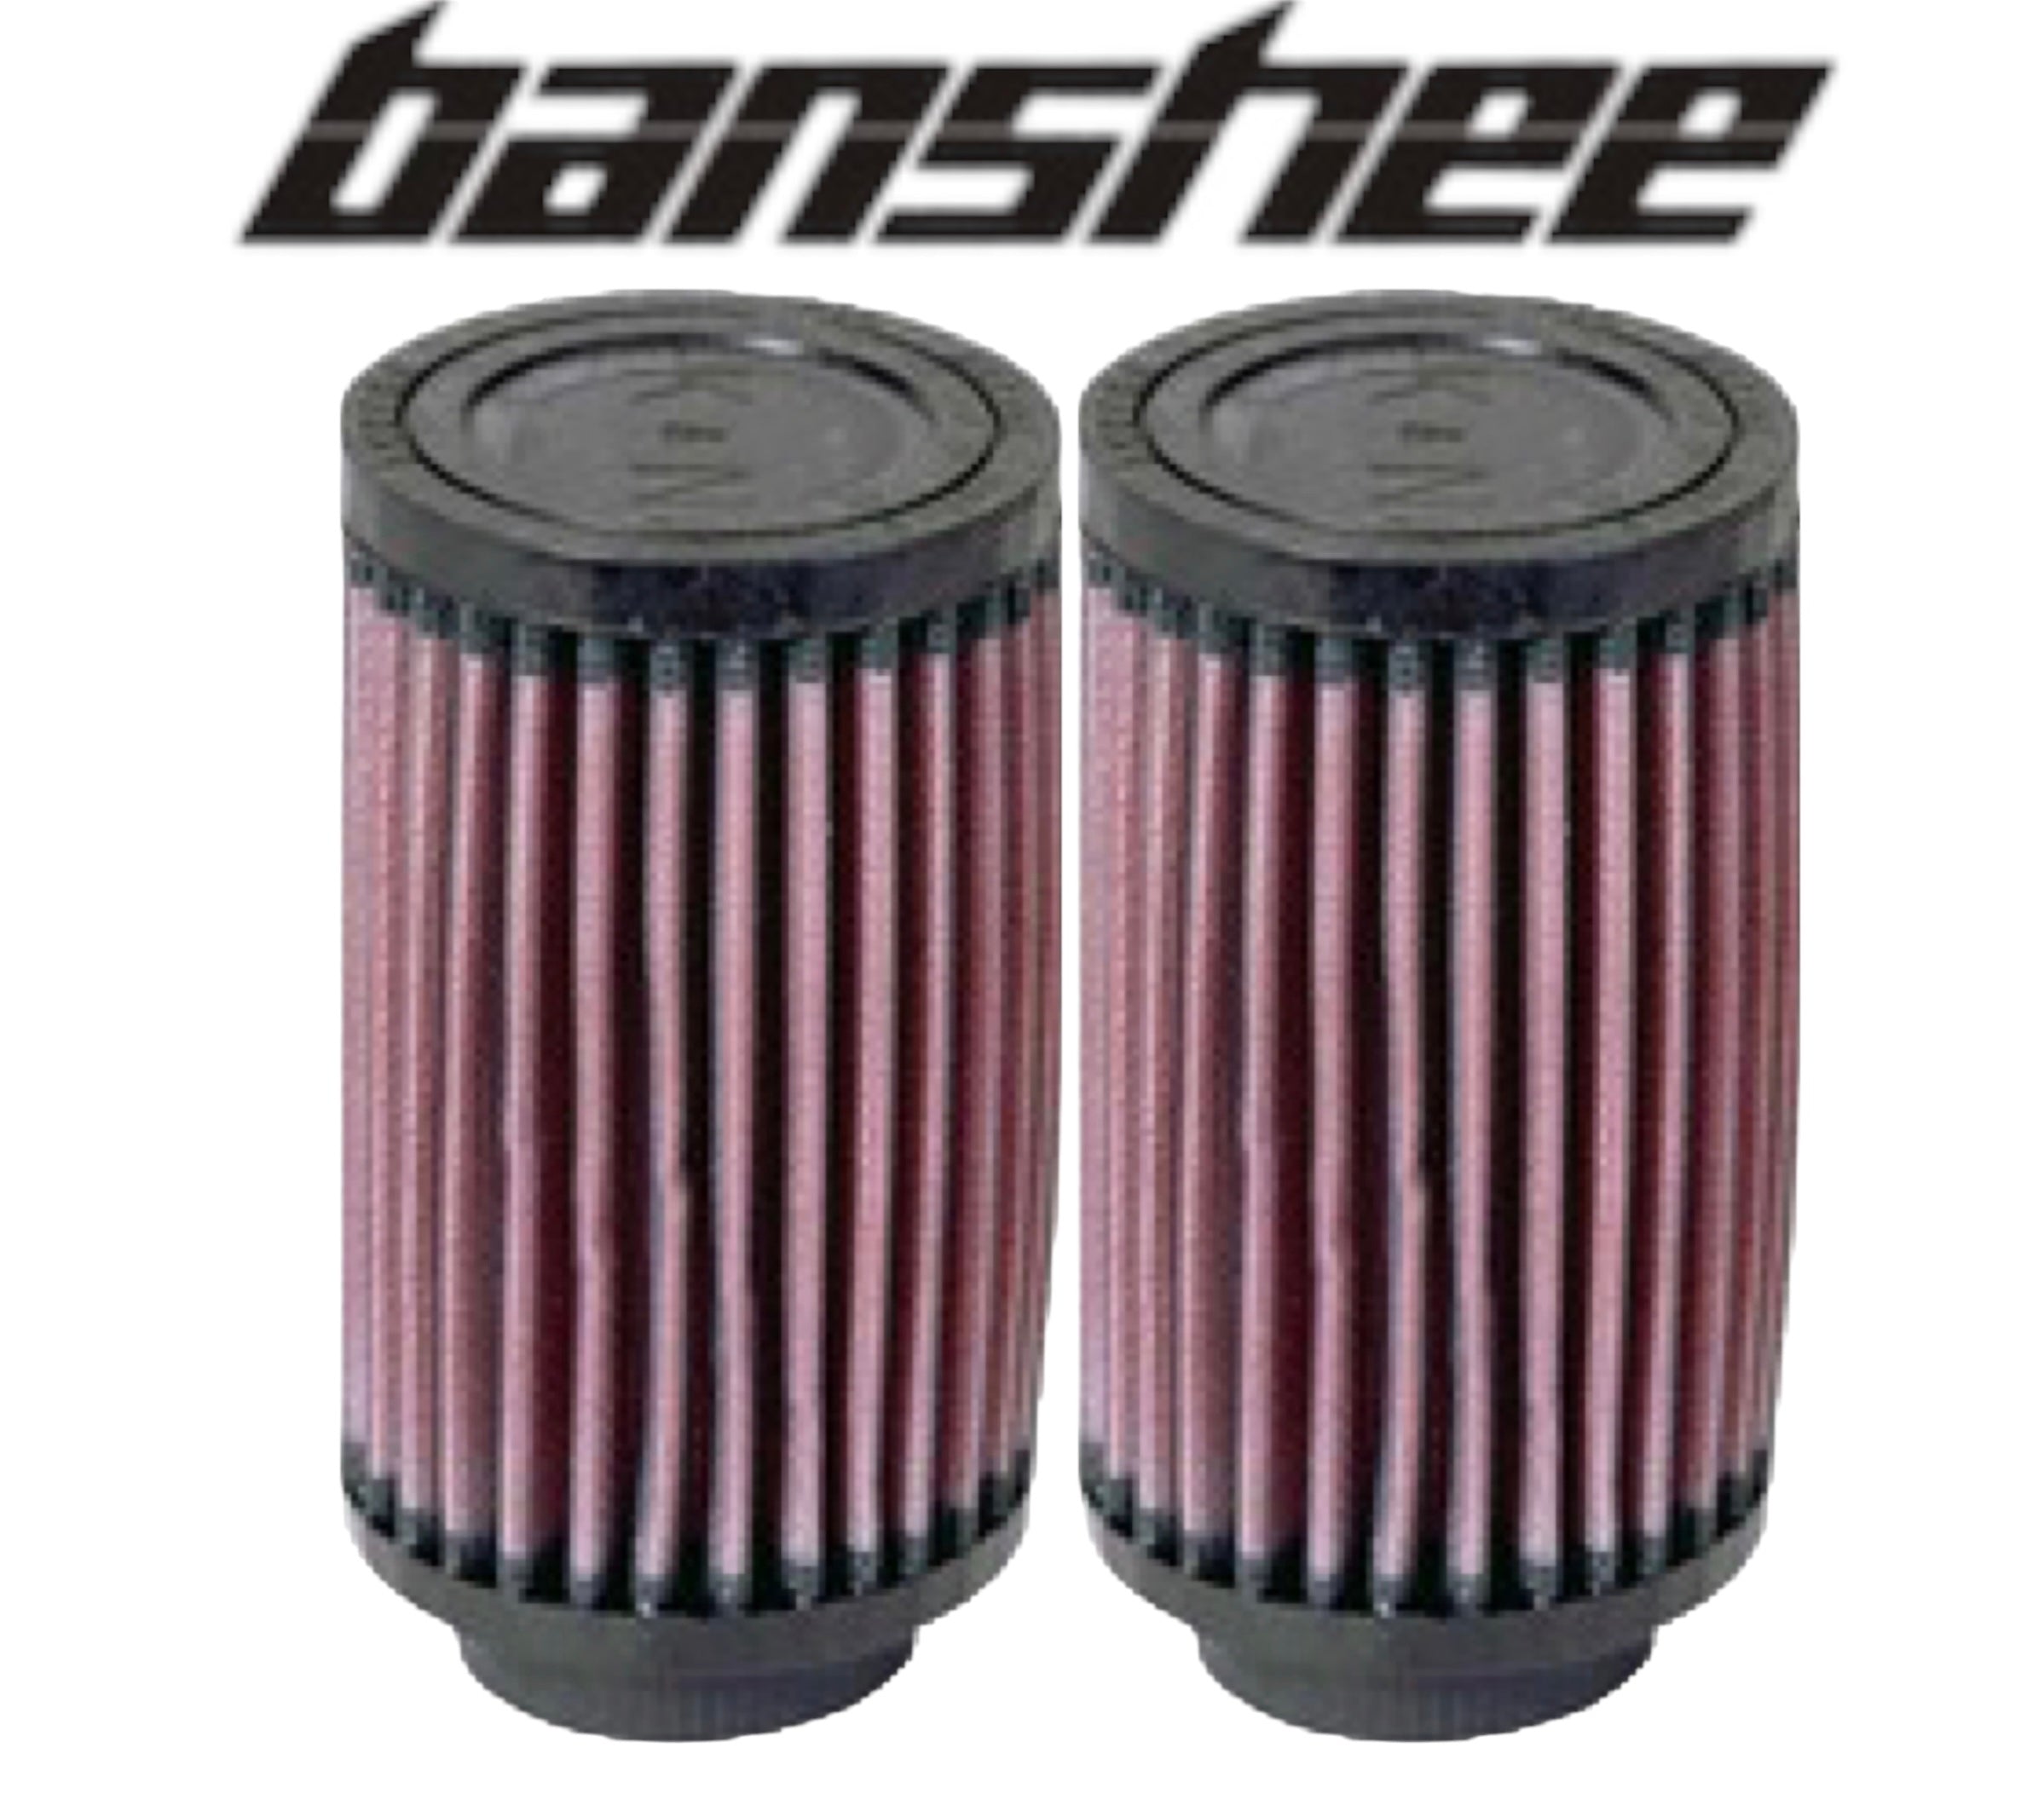 Banshee k&n filter